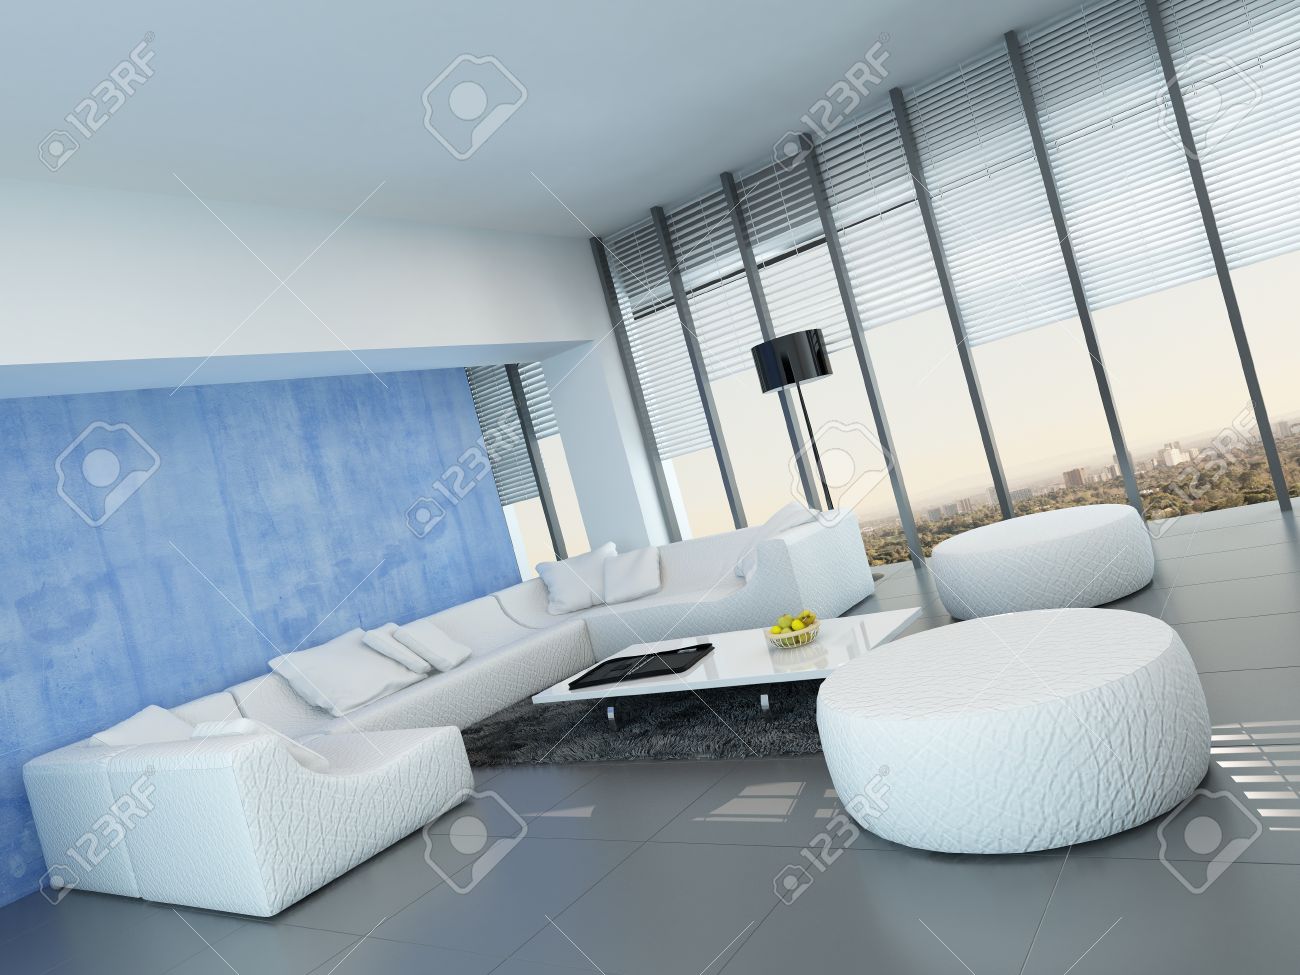 30079667-Contemporary-grey-blue-and-white-living-room-interior-decor--Stock-Photo.jpg